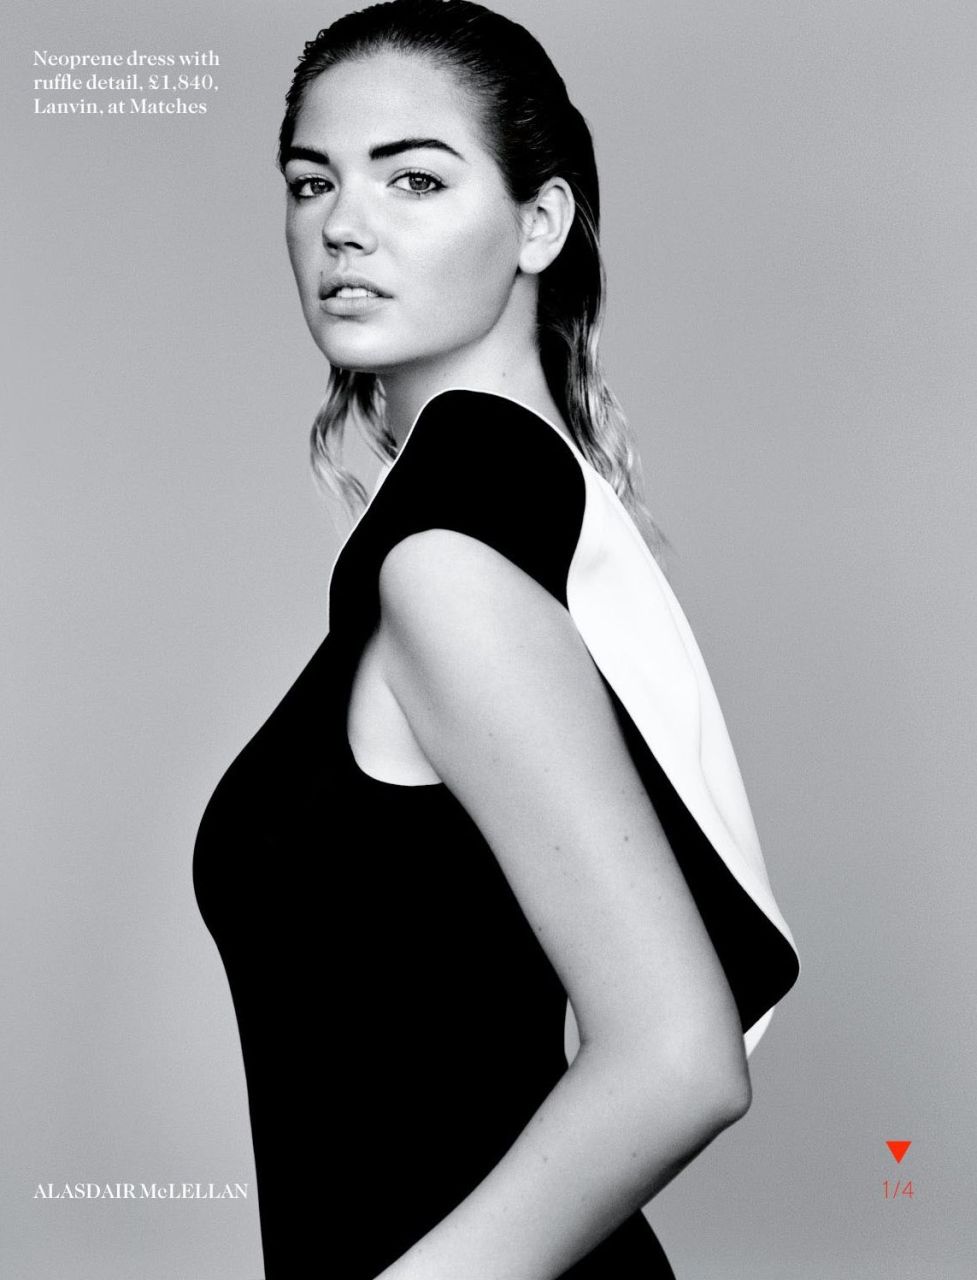 Kate Upton - seksowna modelka w brytyjskim Vogue